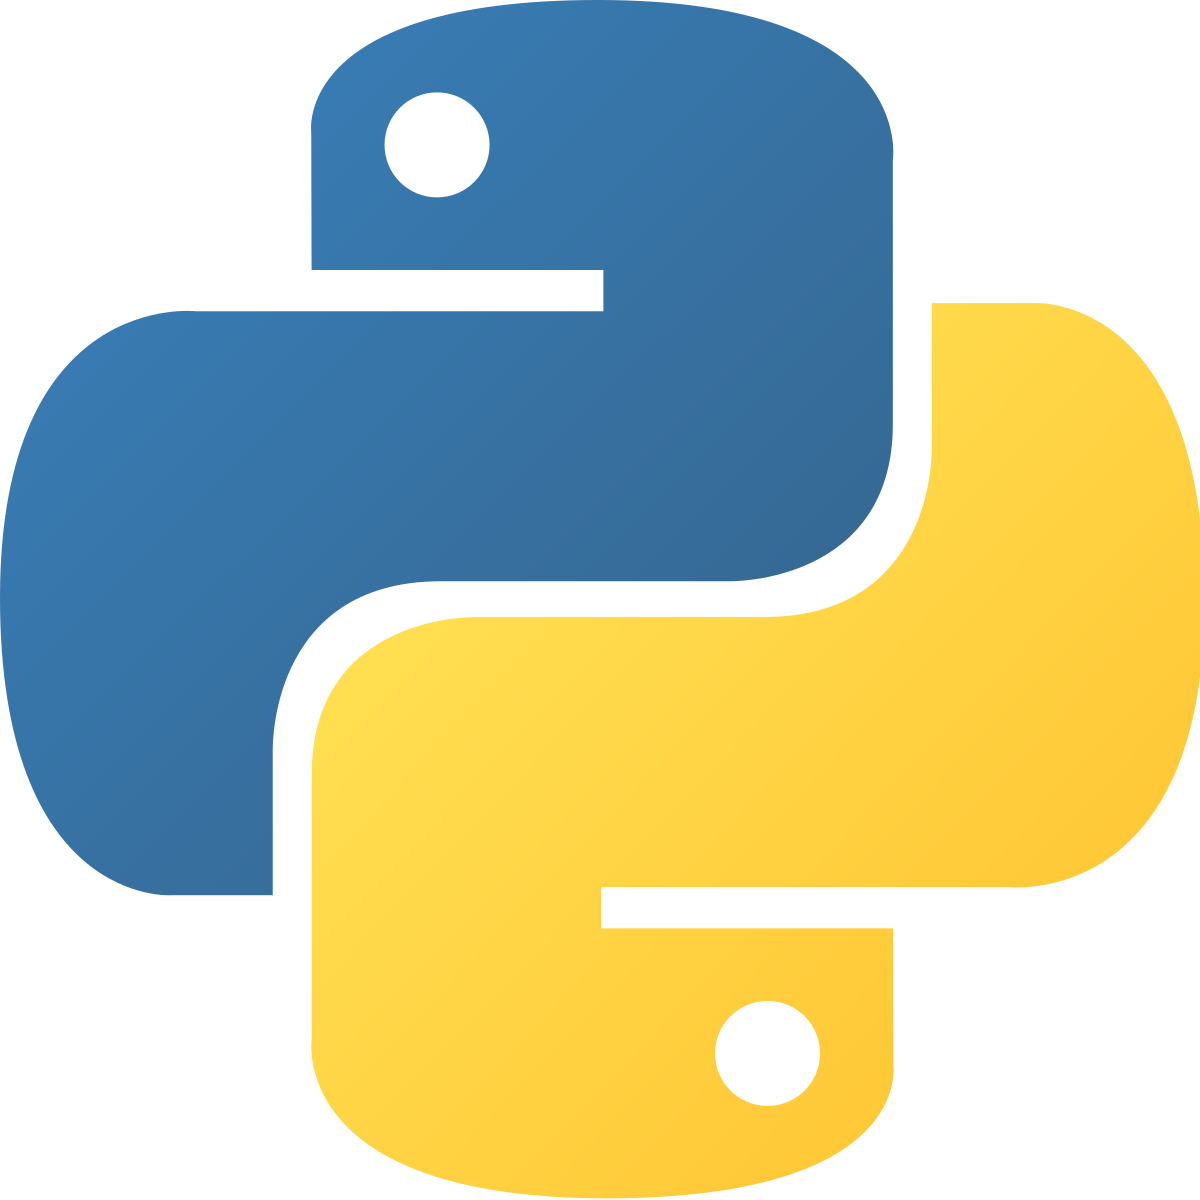 _images/python-logo.png